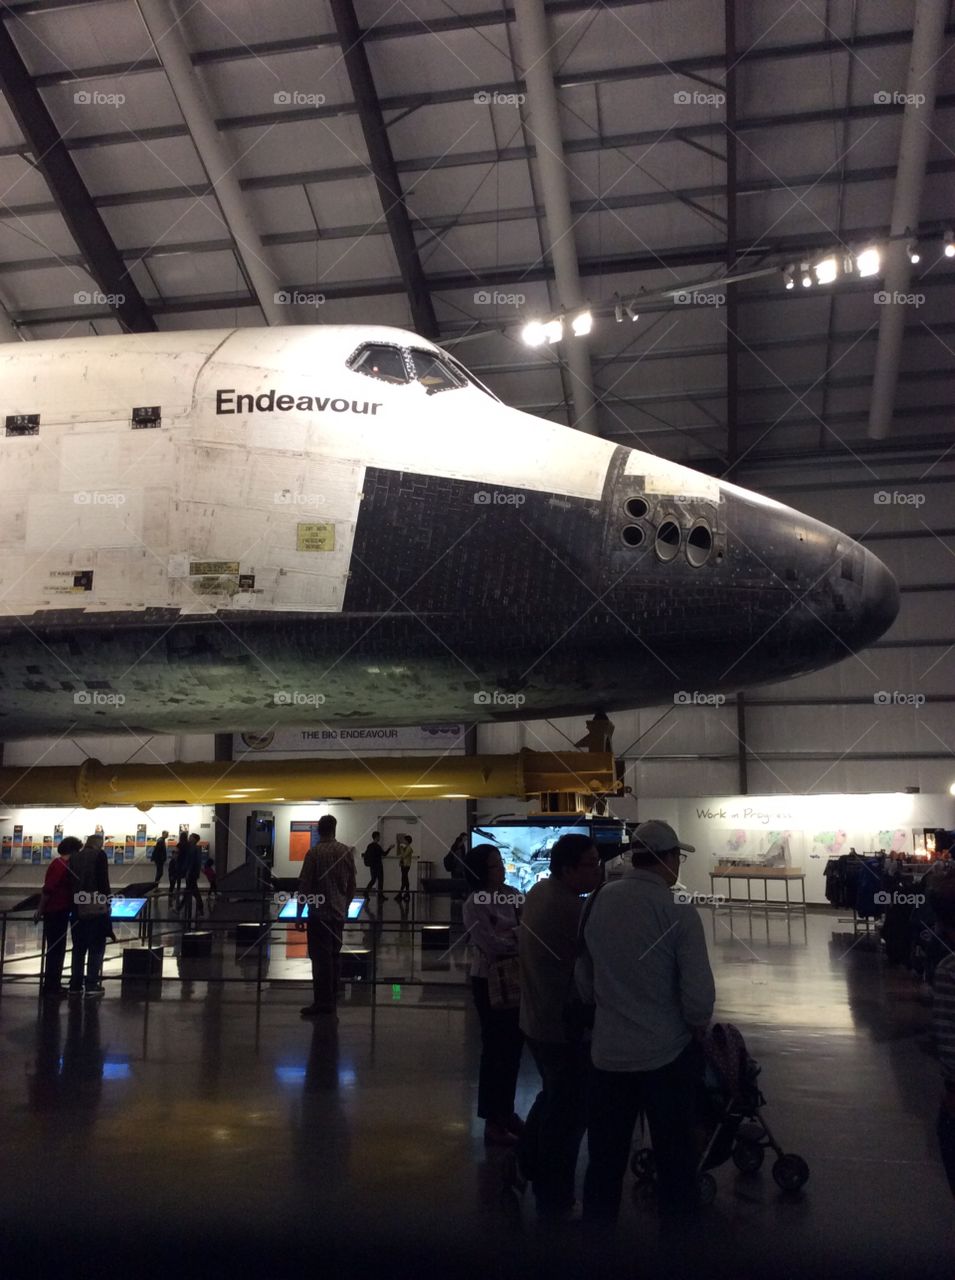 Space shuttle endeavor
